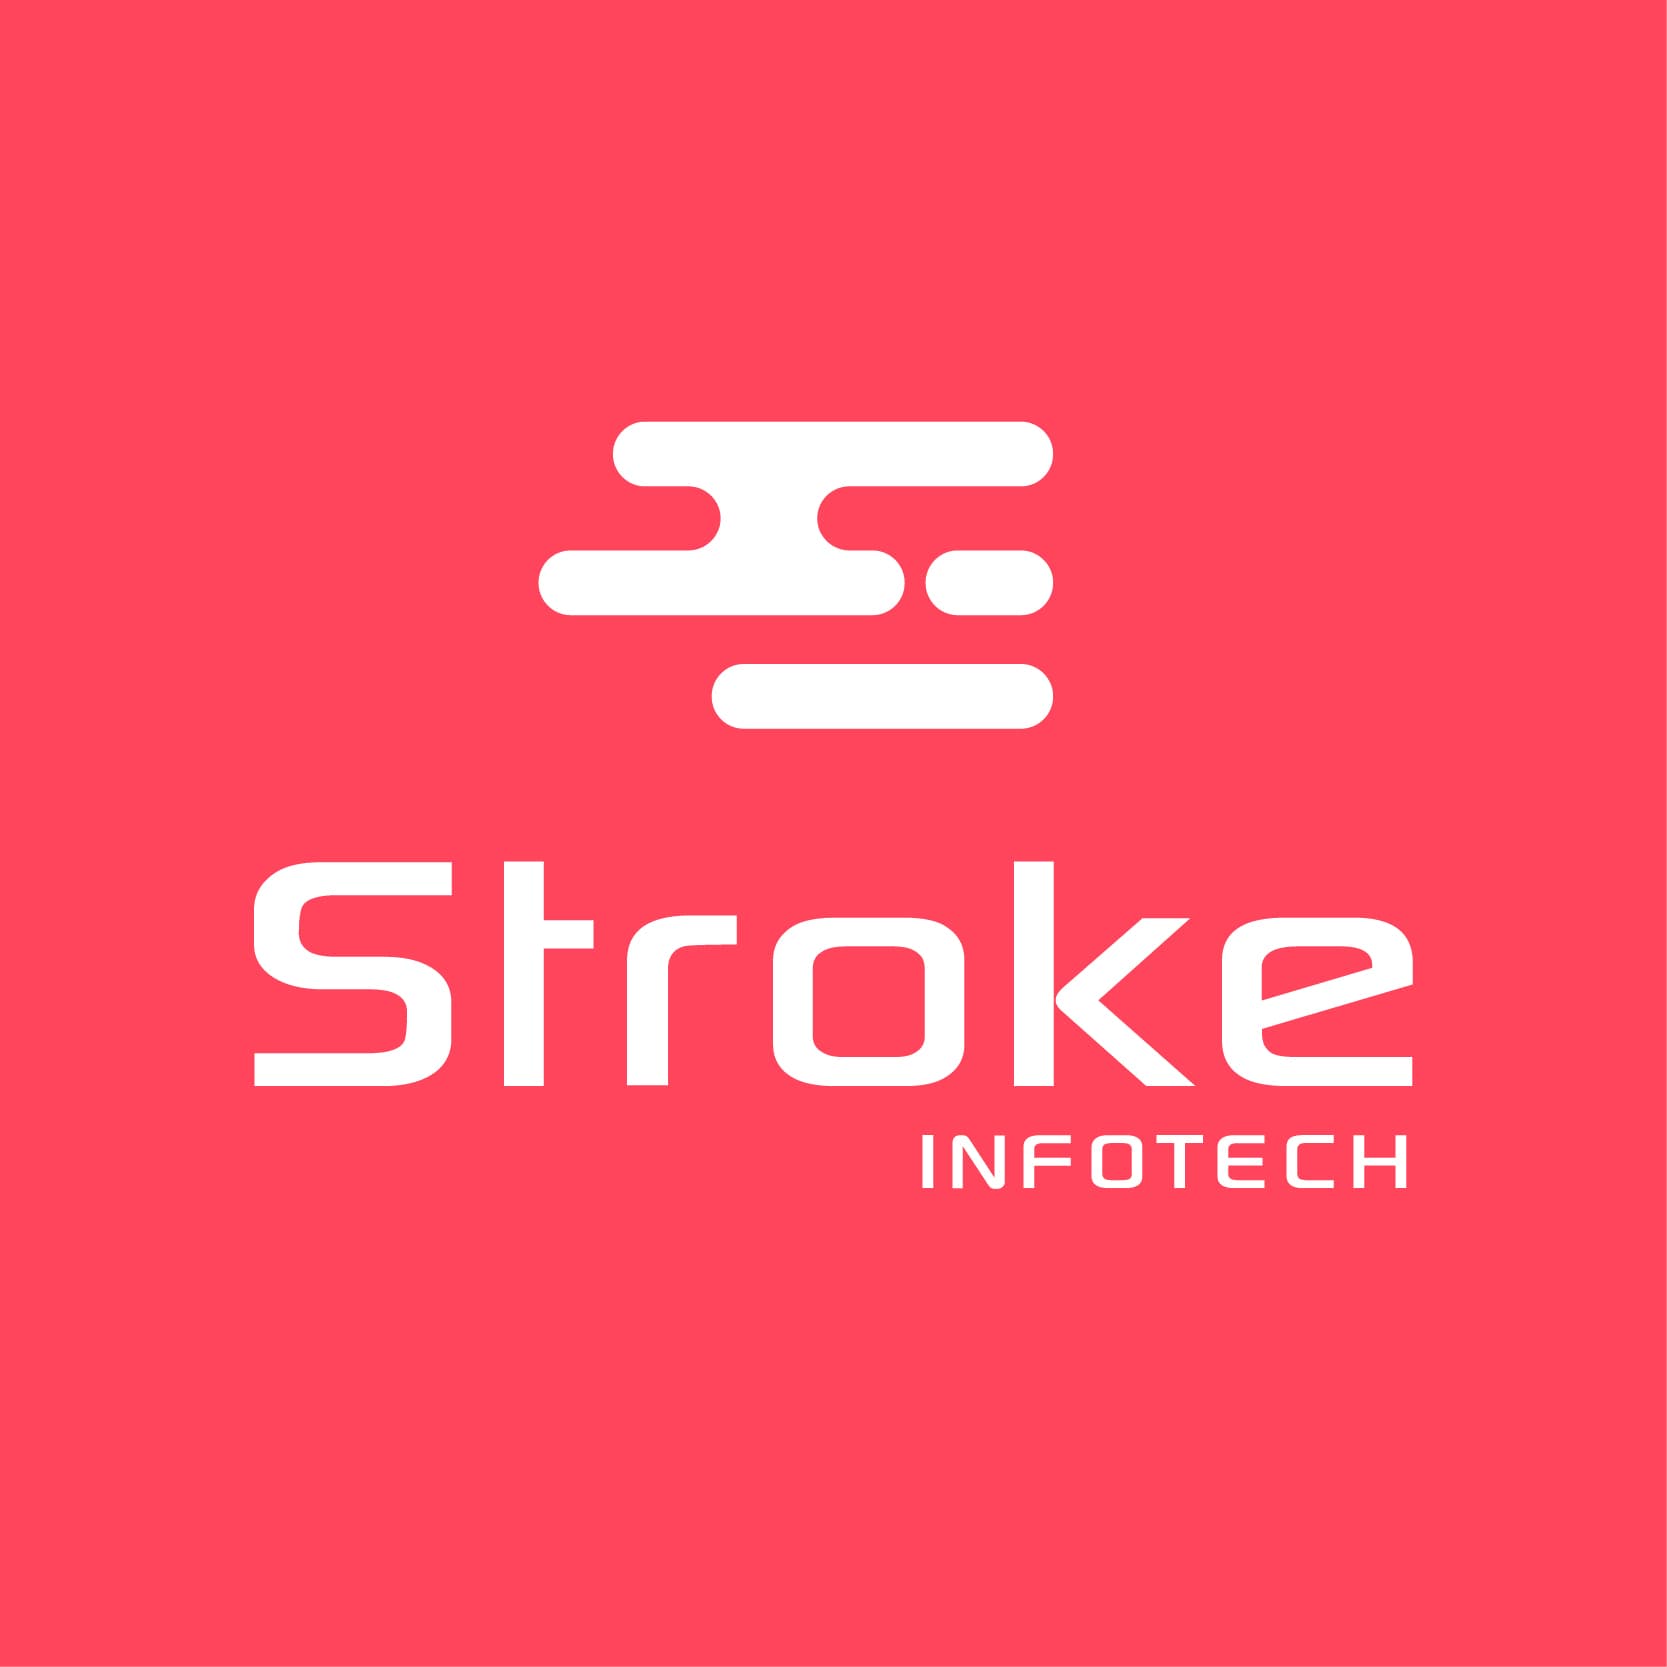 Stroke Infotech logo